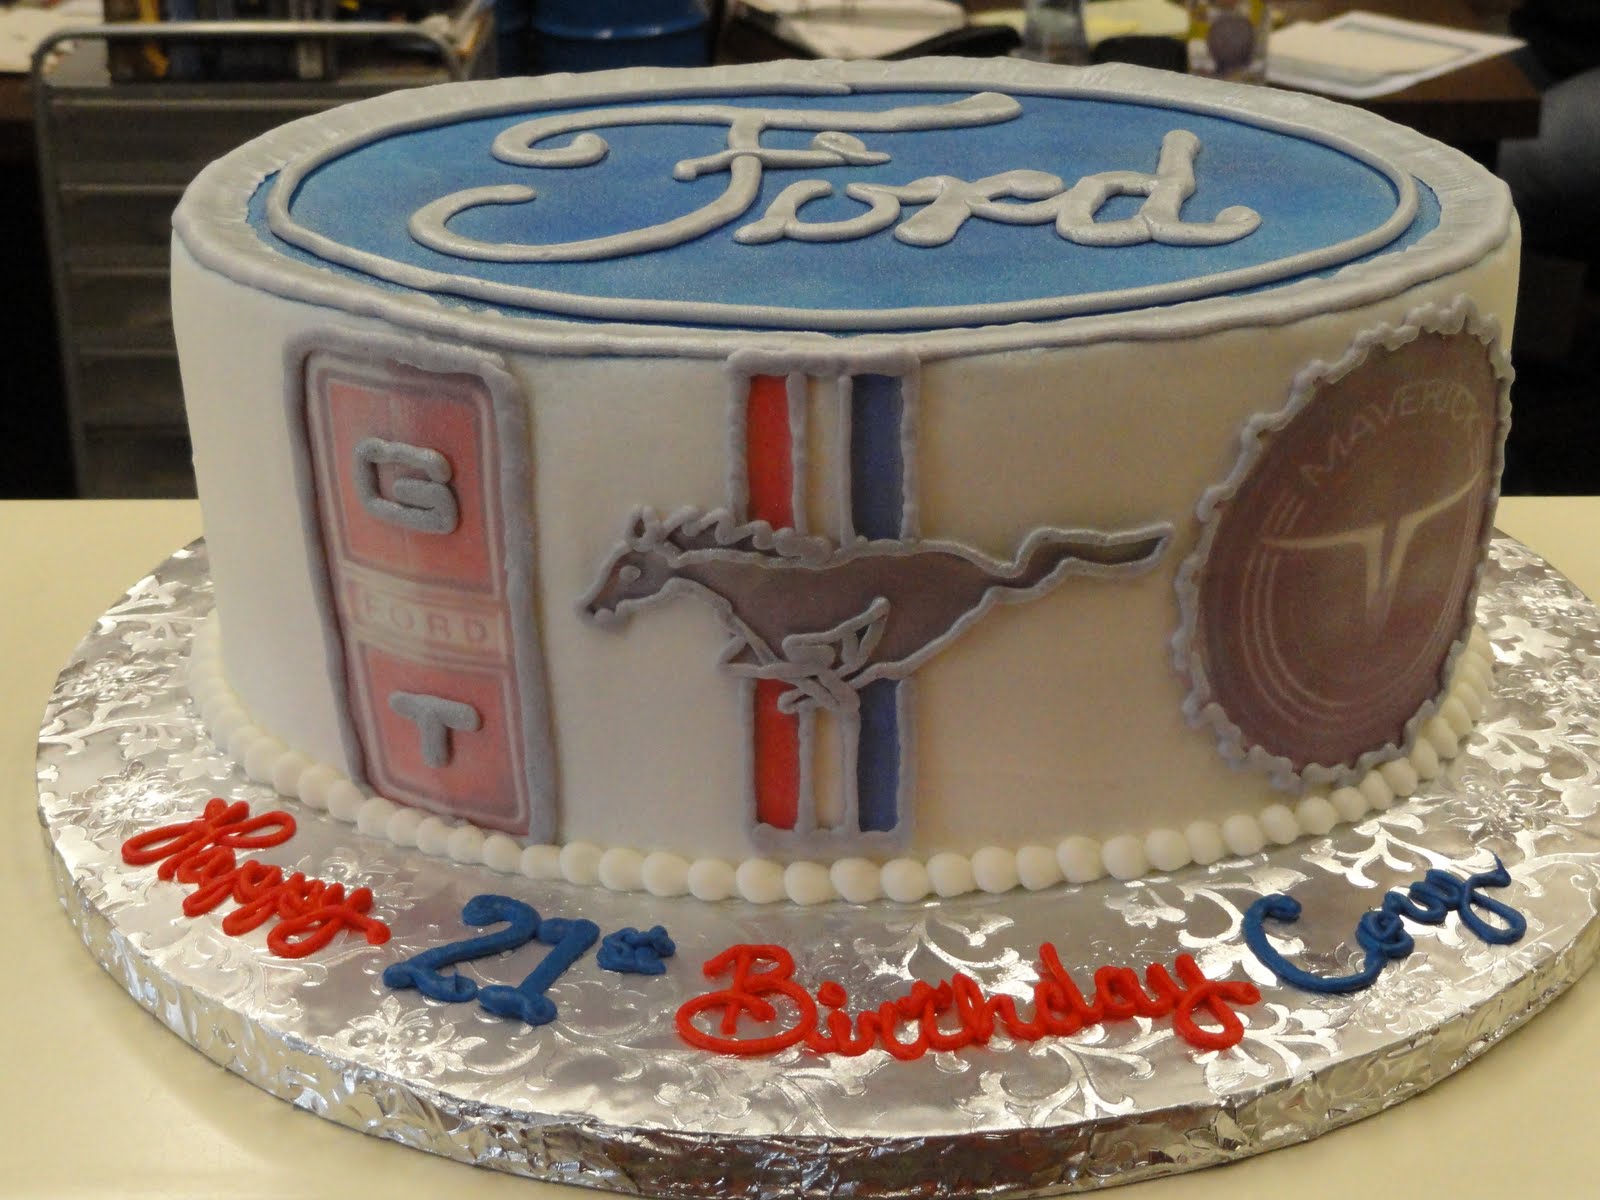 Ford themed birthday cake #5